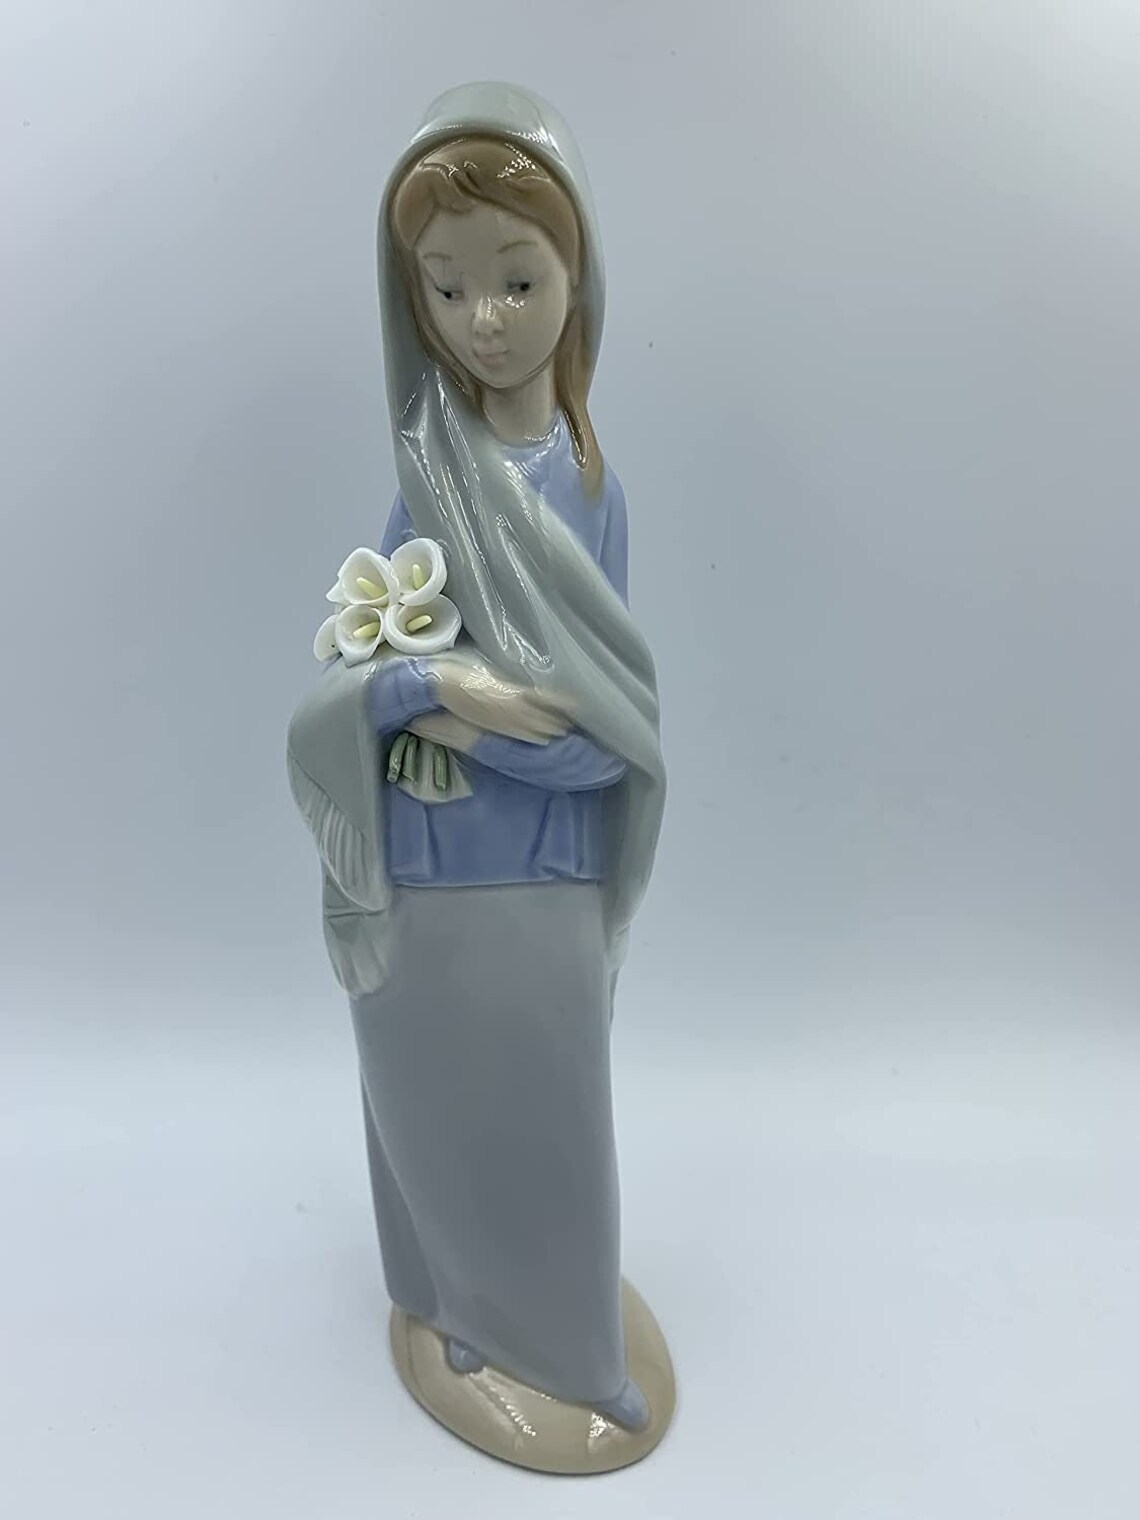 Primary image for Llardo Porcelain Figurine Girl with Flowers. Spain, 20th Century.